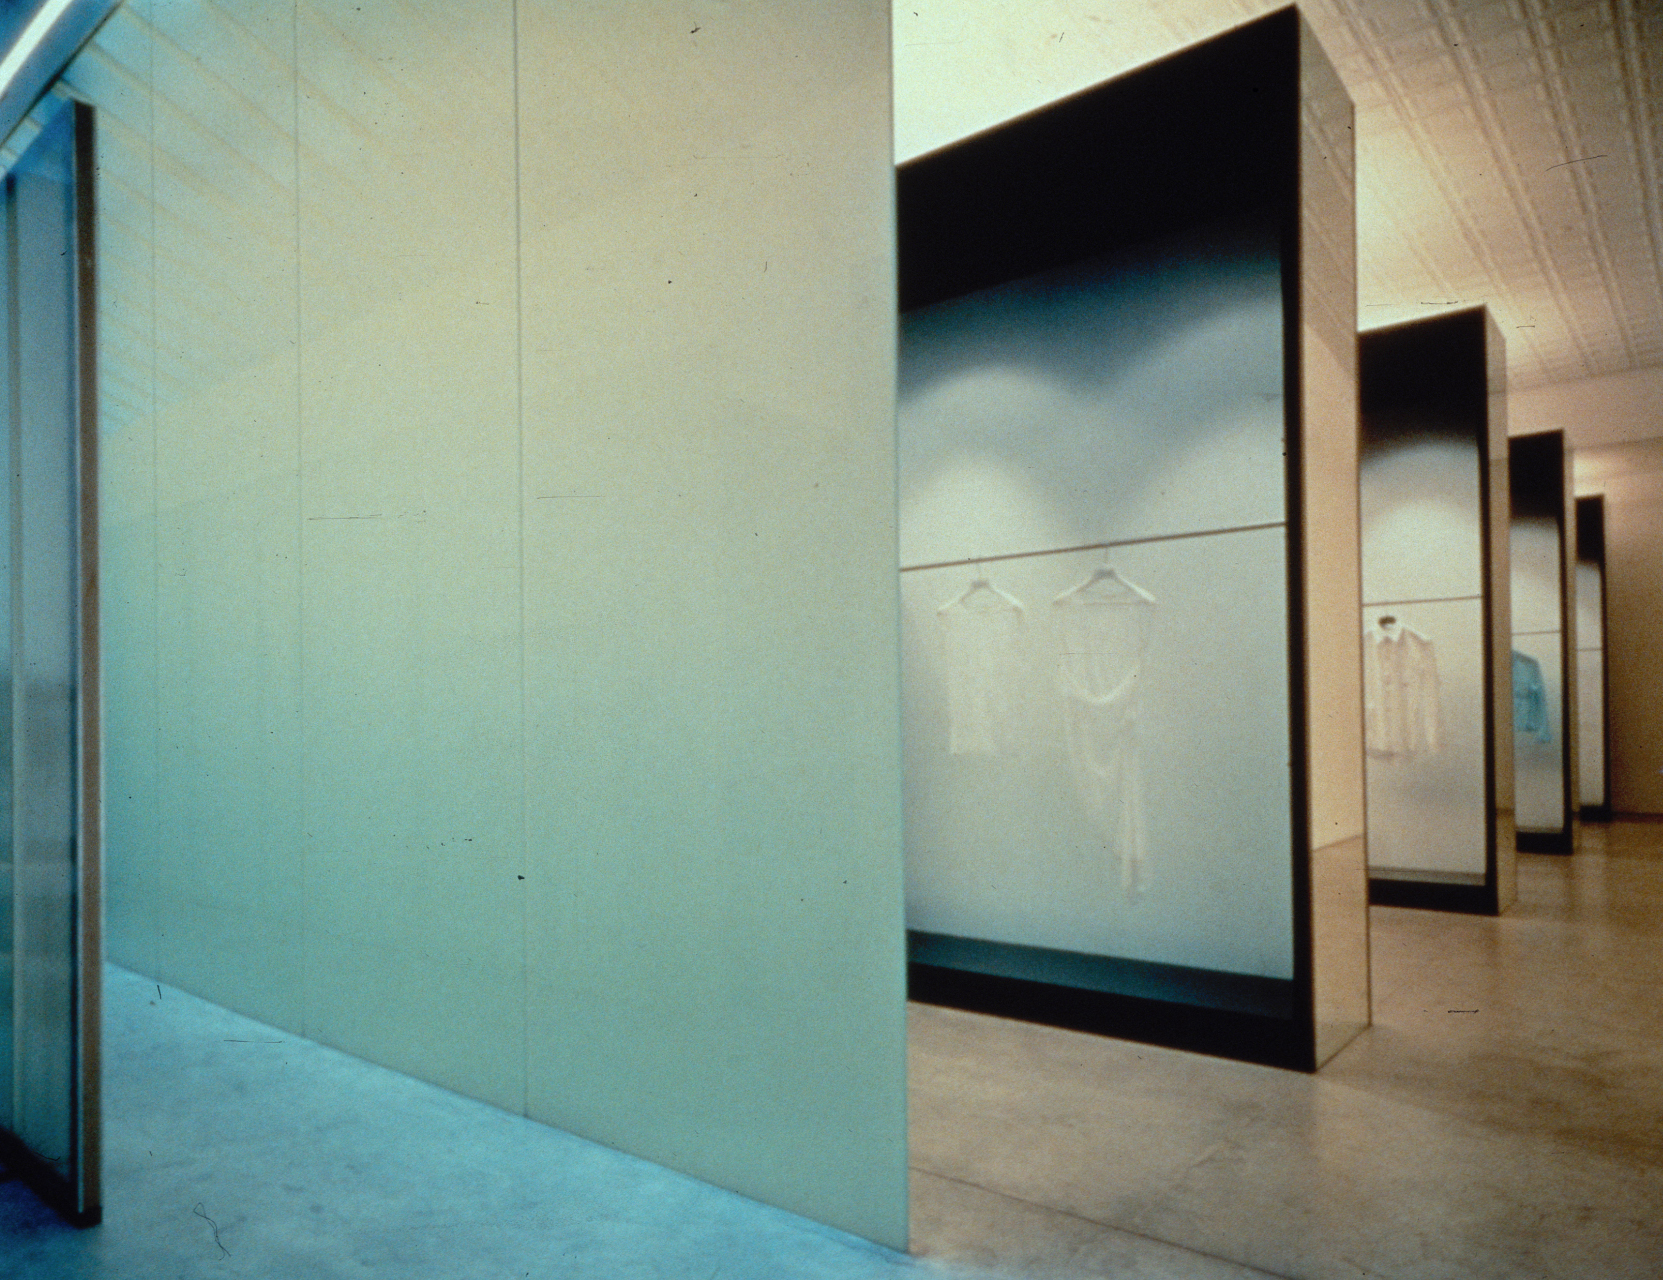 Helmut Lang Showroom — Studio Cicetti Architect